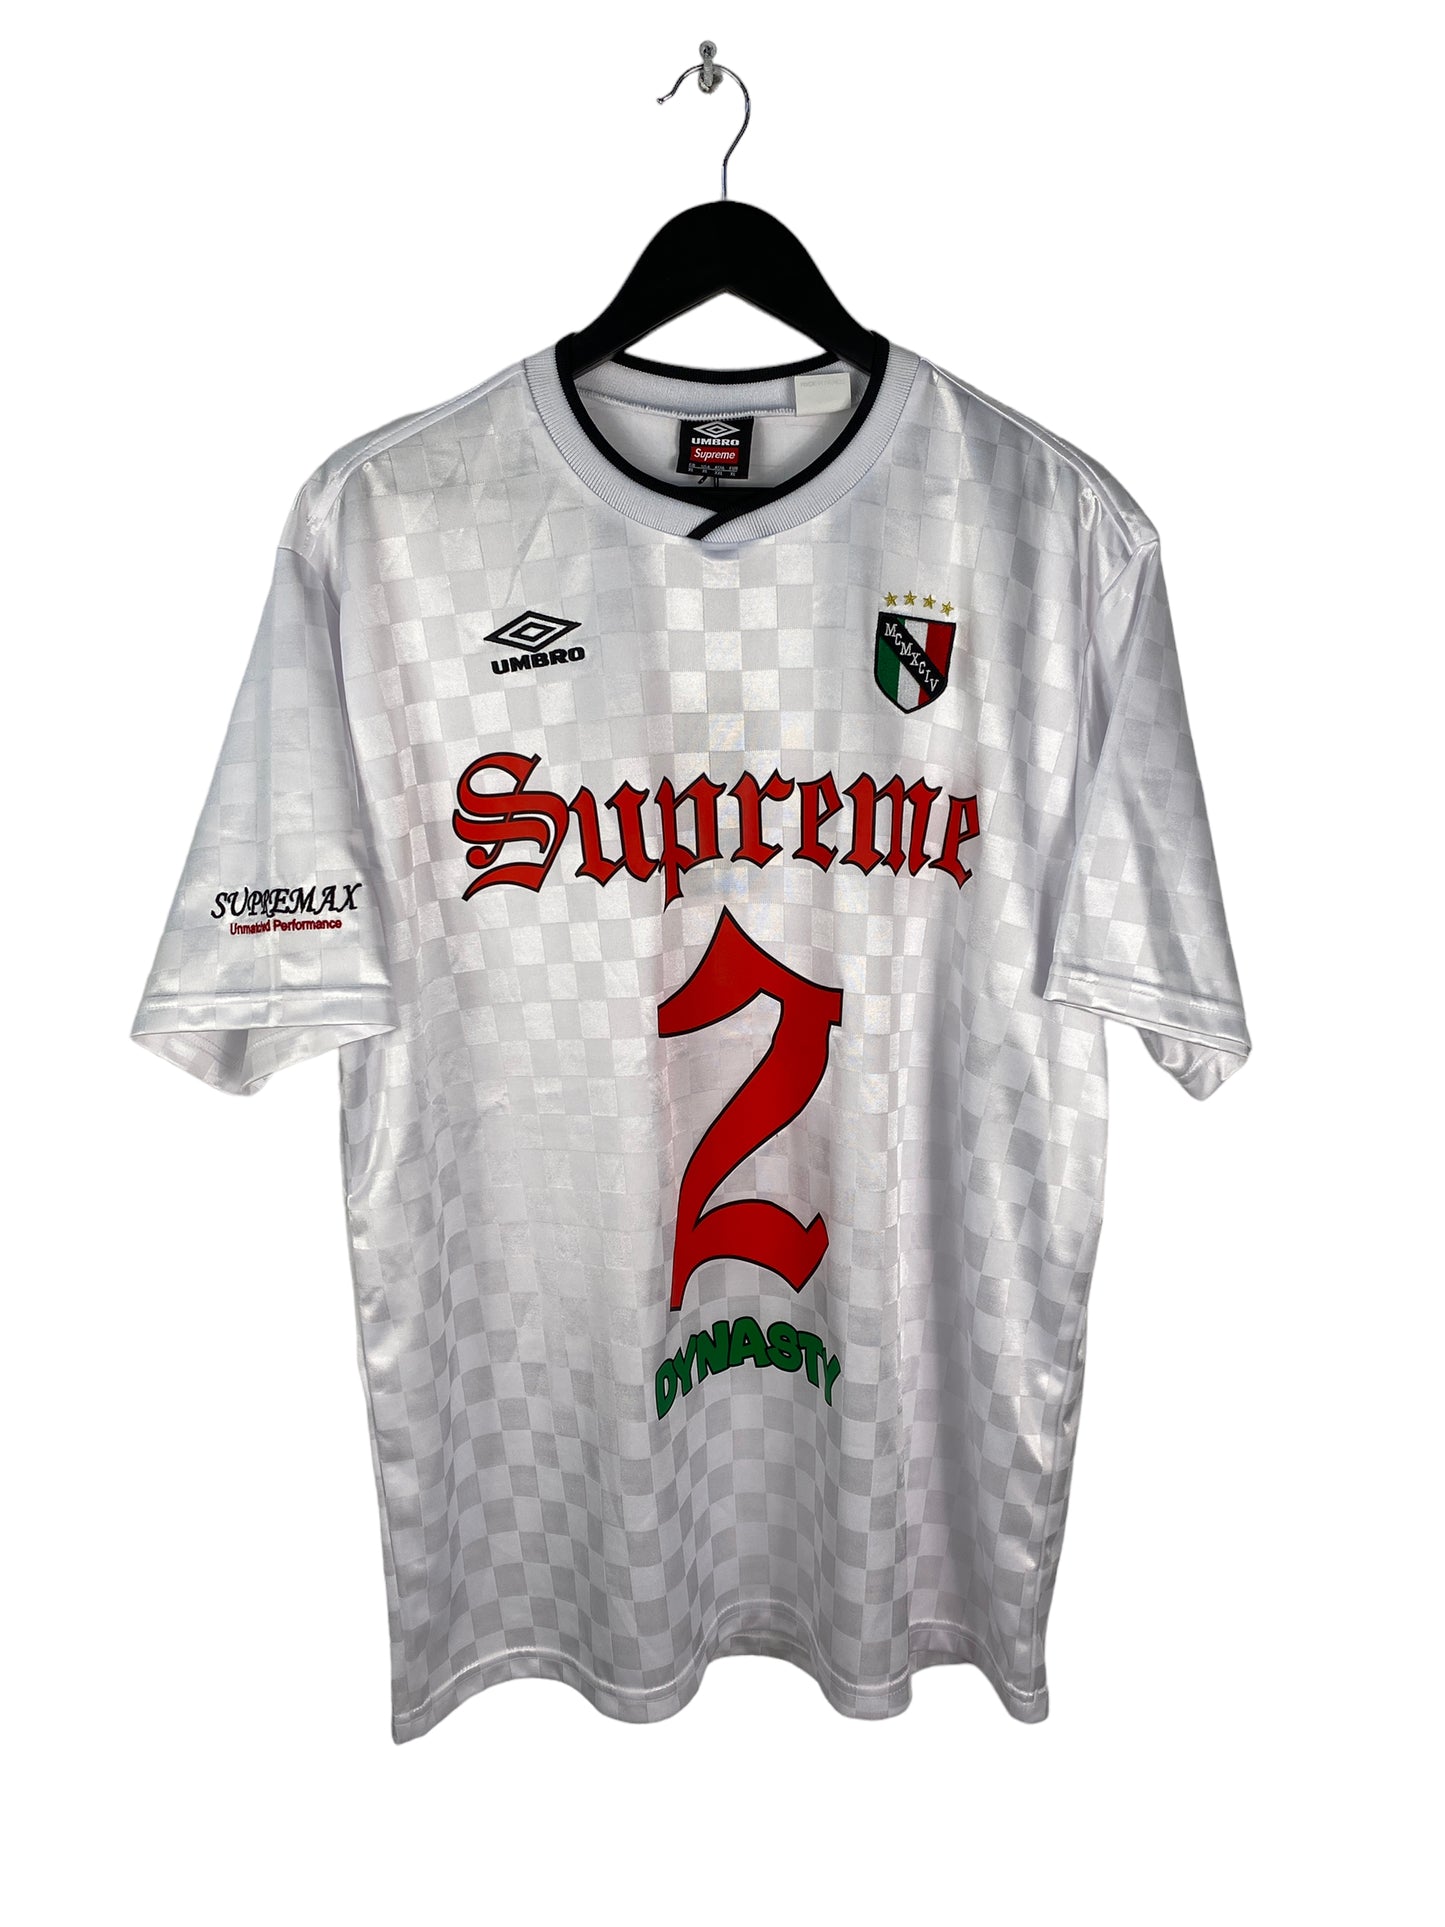 Supreme Umbro soccer Jersey white - 通販 - gofukuyasan.com